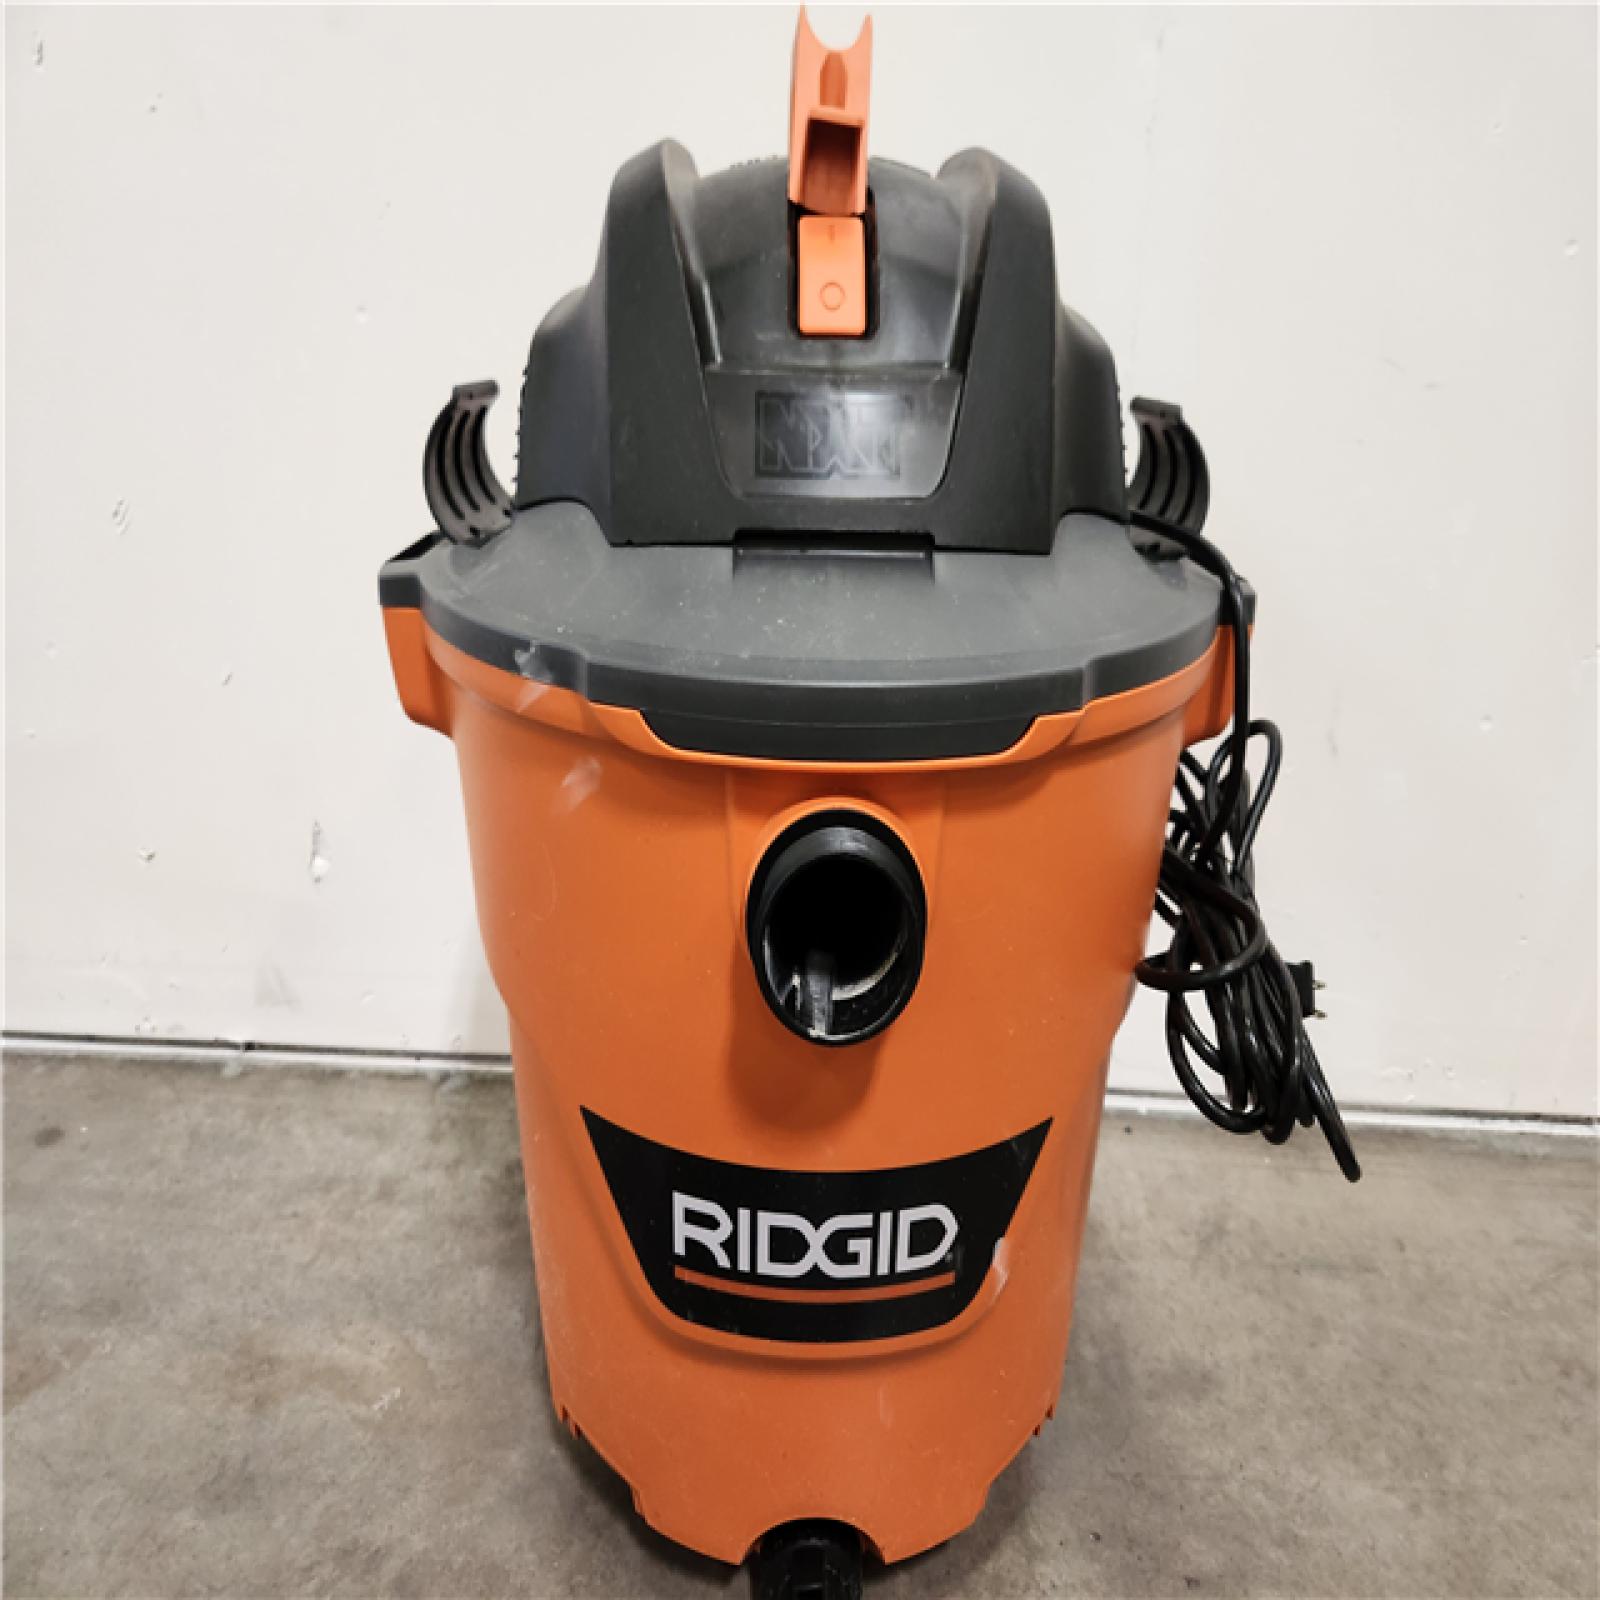 Phoenix Location RIDGID 14 Gallon 6.0 Peak HP NXT Wet/Dry Shop Vacuum with Fine Dust Filter, Locking Hose and Accessories